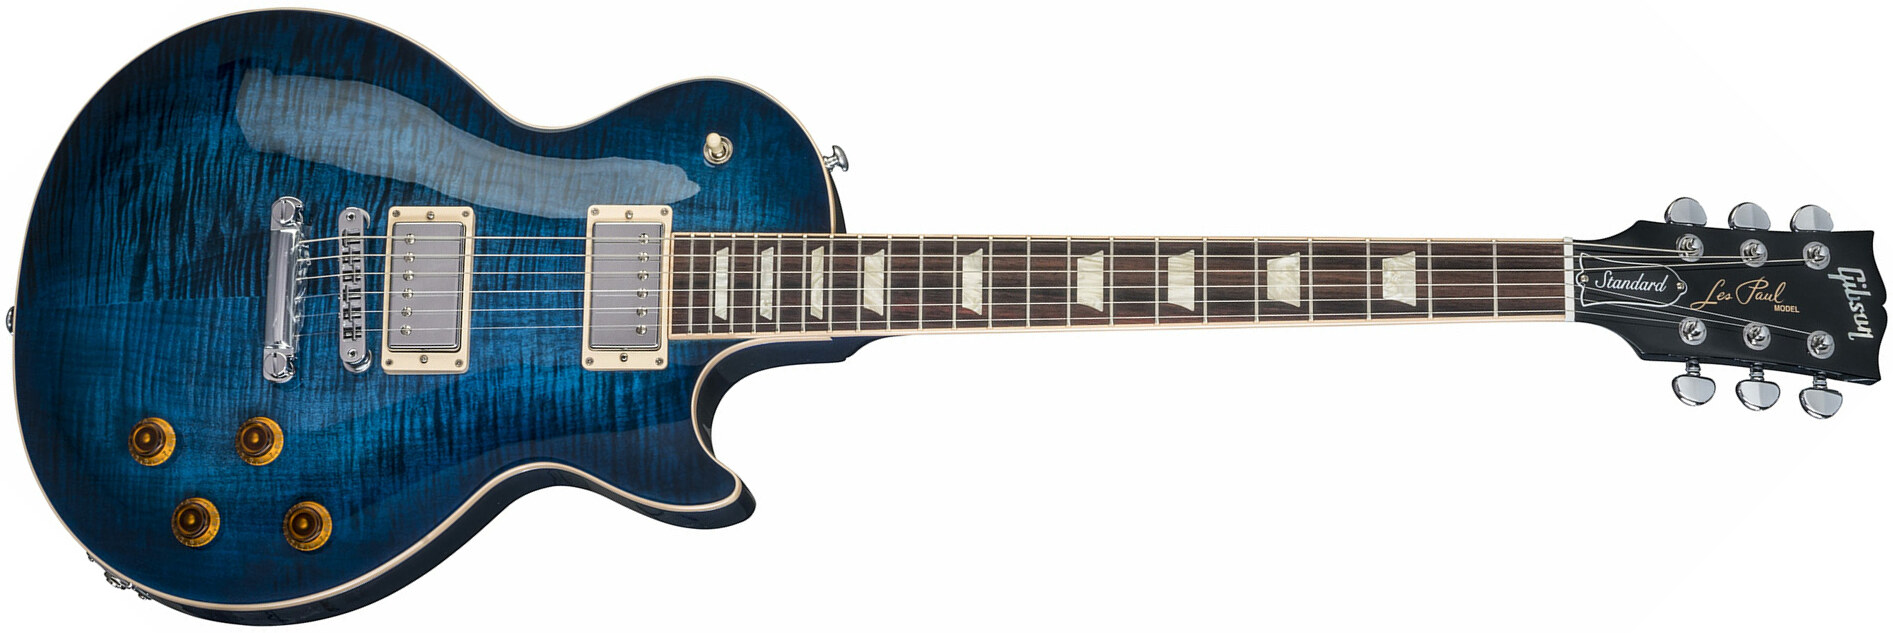 Gibson Les Paul Standard - Cobalt Burst - Single cut electric guitar - Main picture